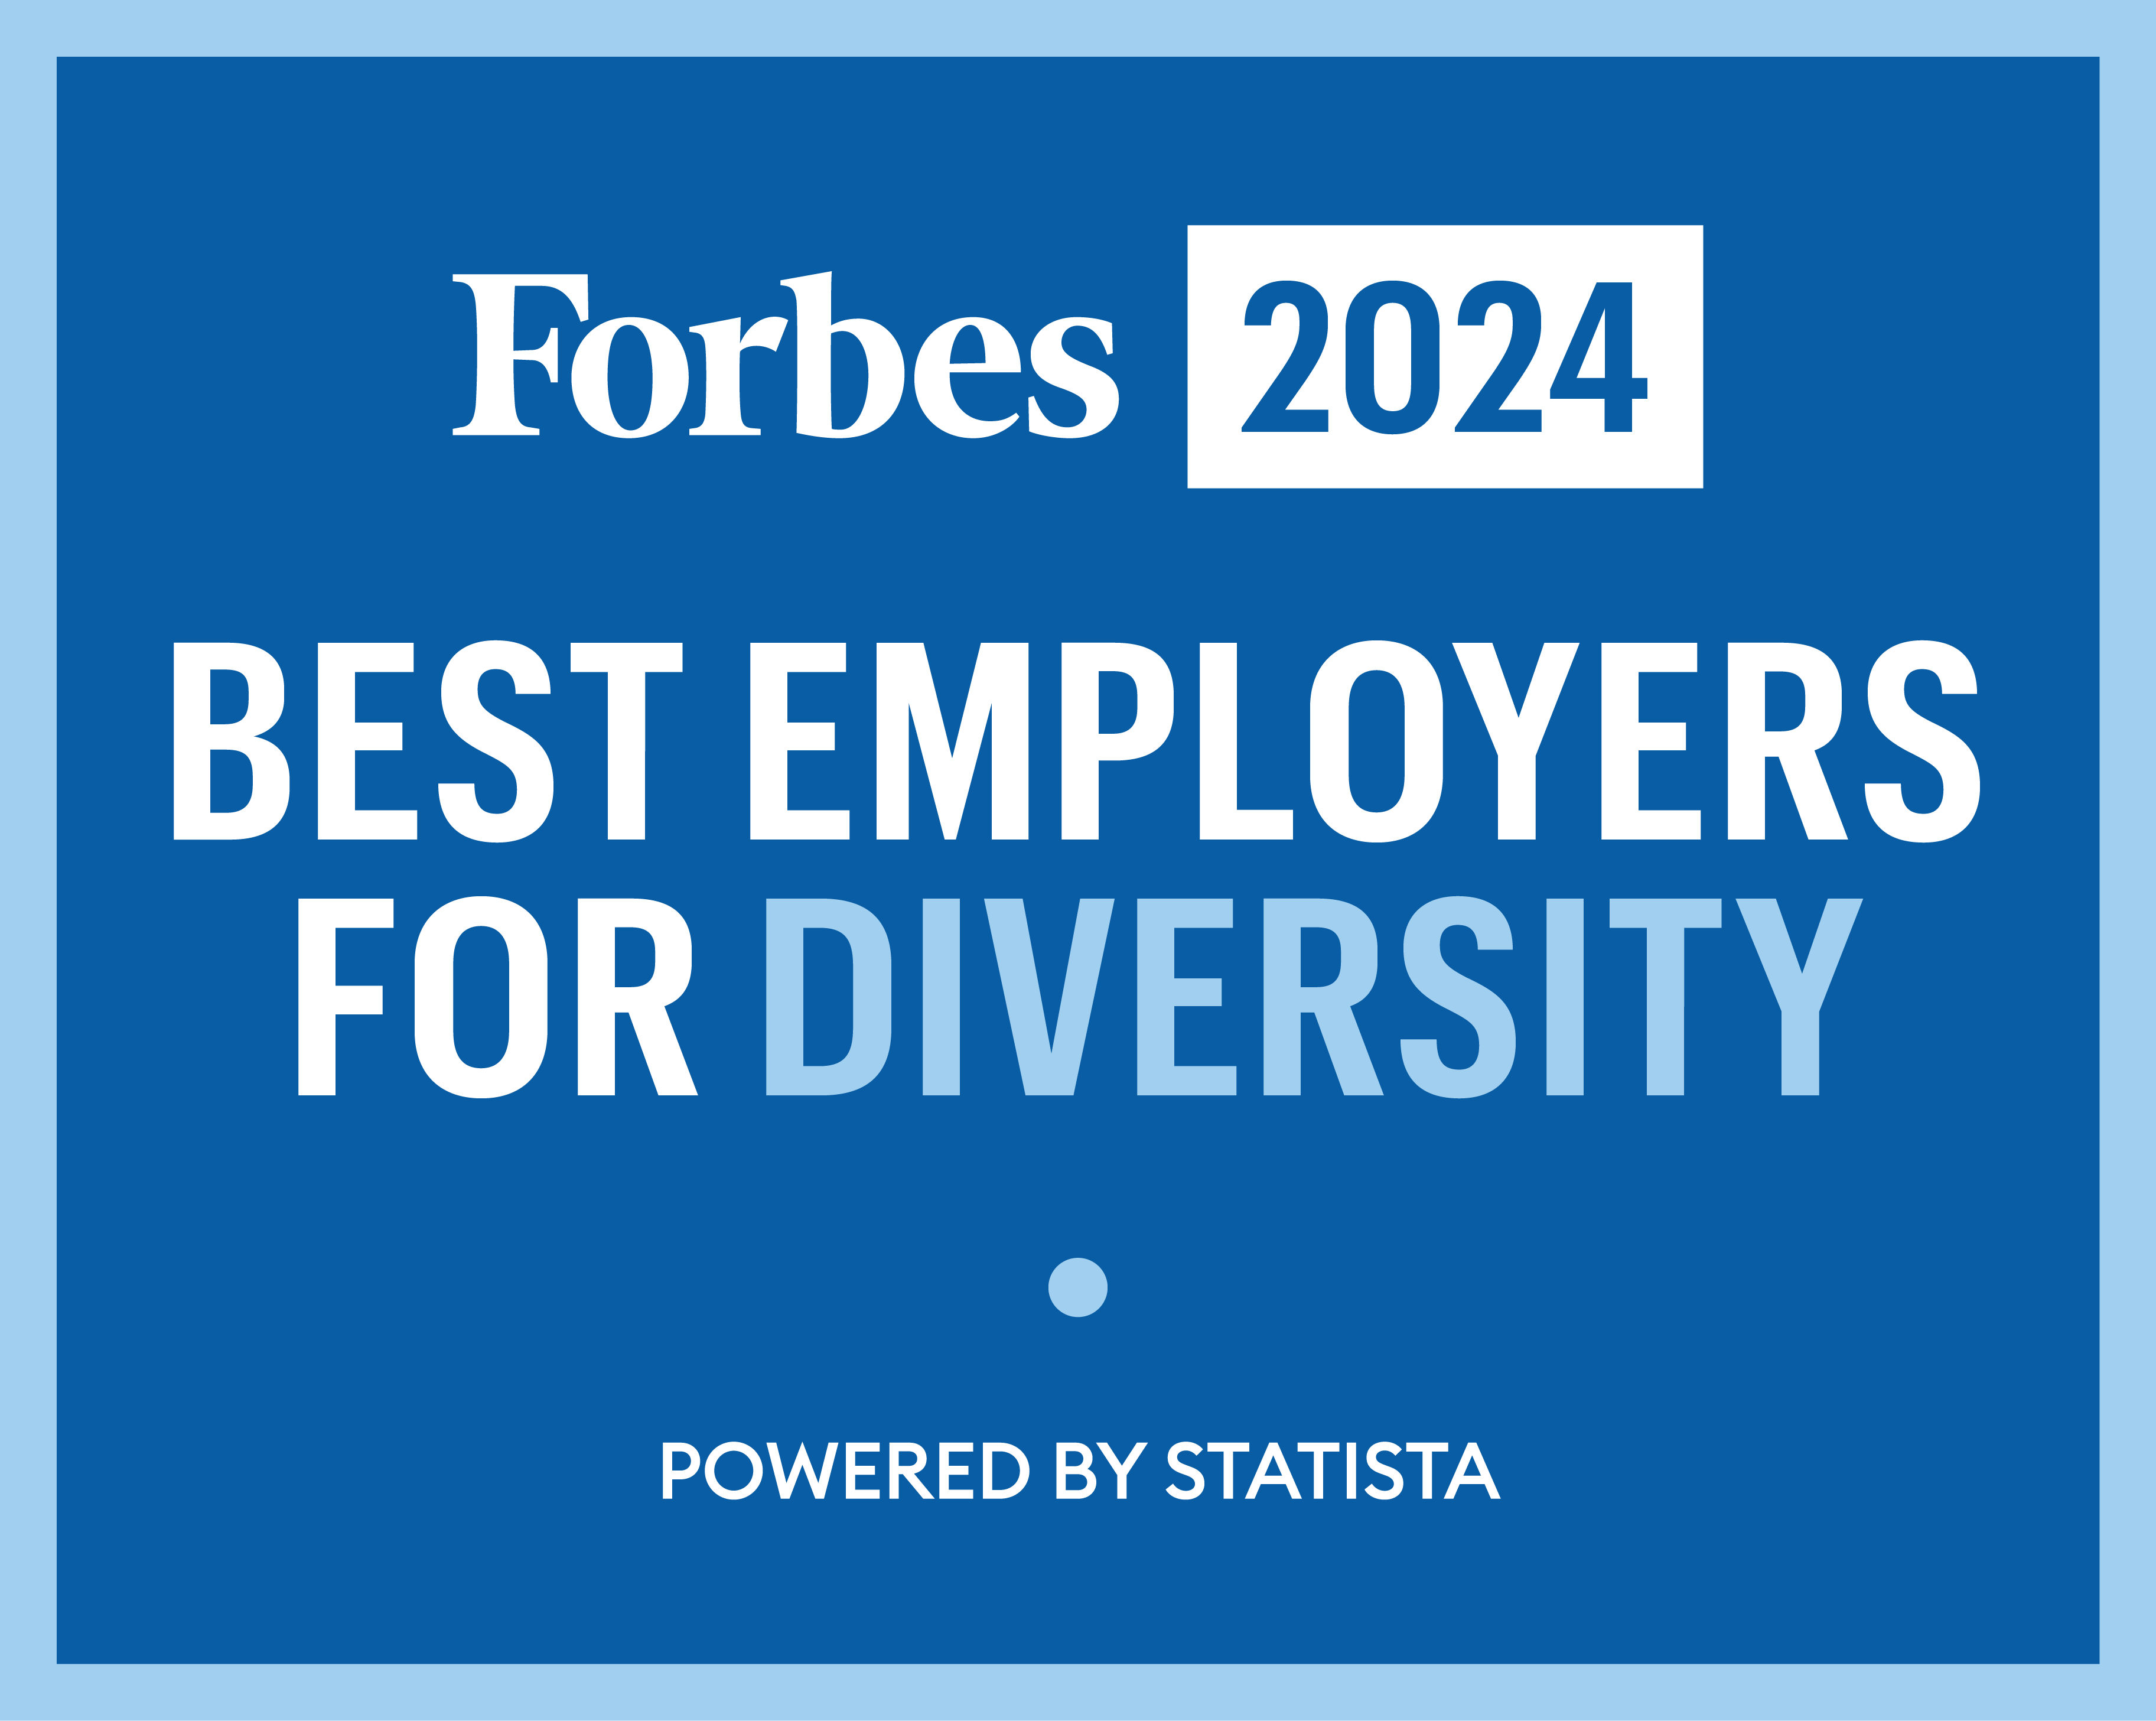 Forbes Best Employer for Diversity Award Badge